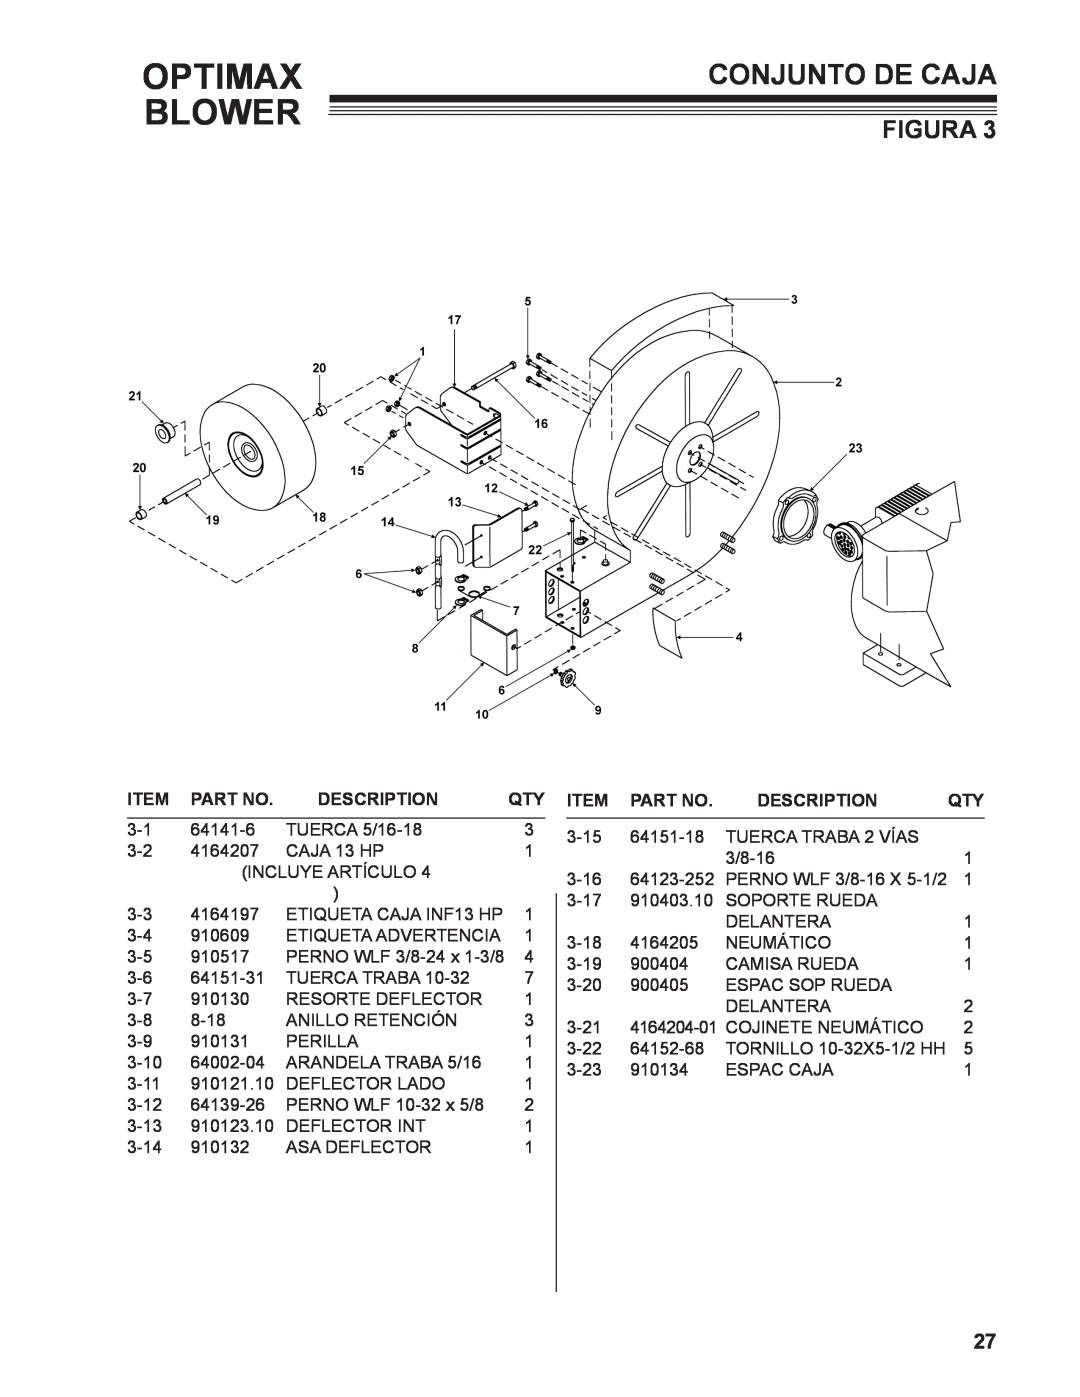 Little Wonder 9131-00-01 technical manual Conjunto De Caja, Optimax Blower, Figura, Description 